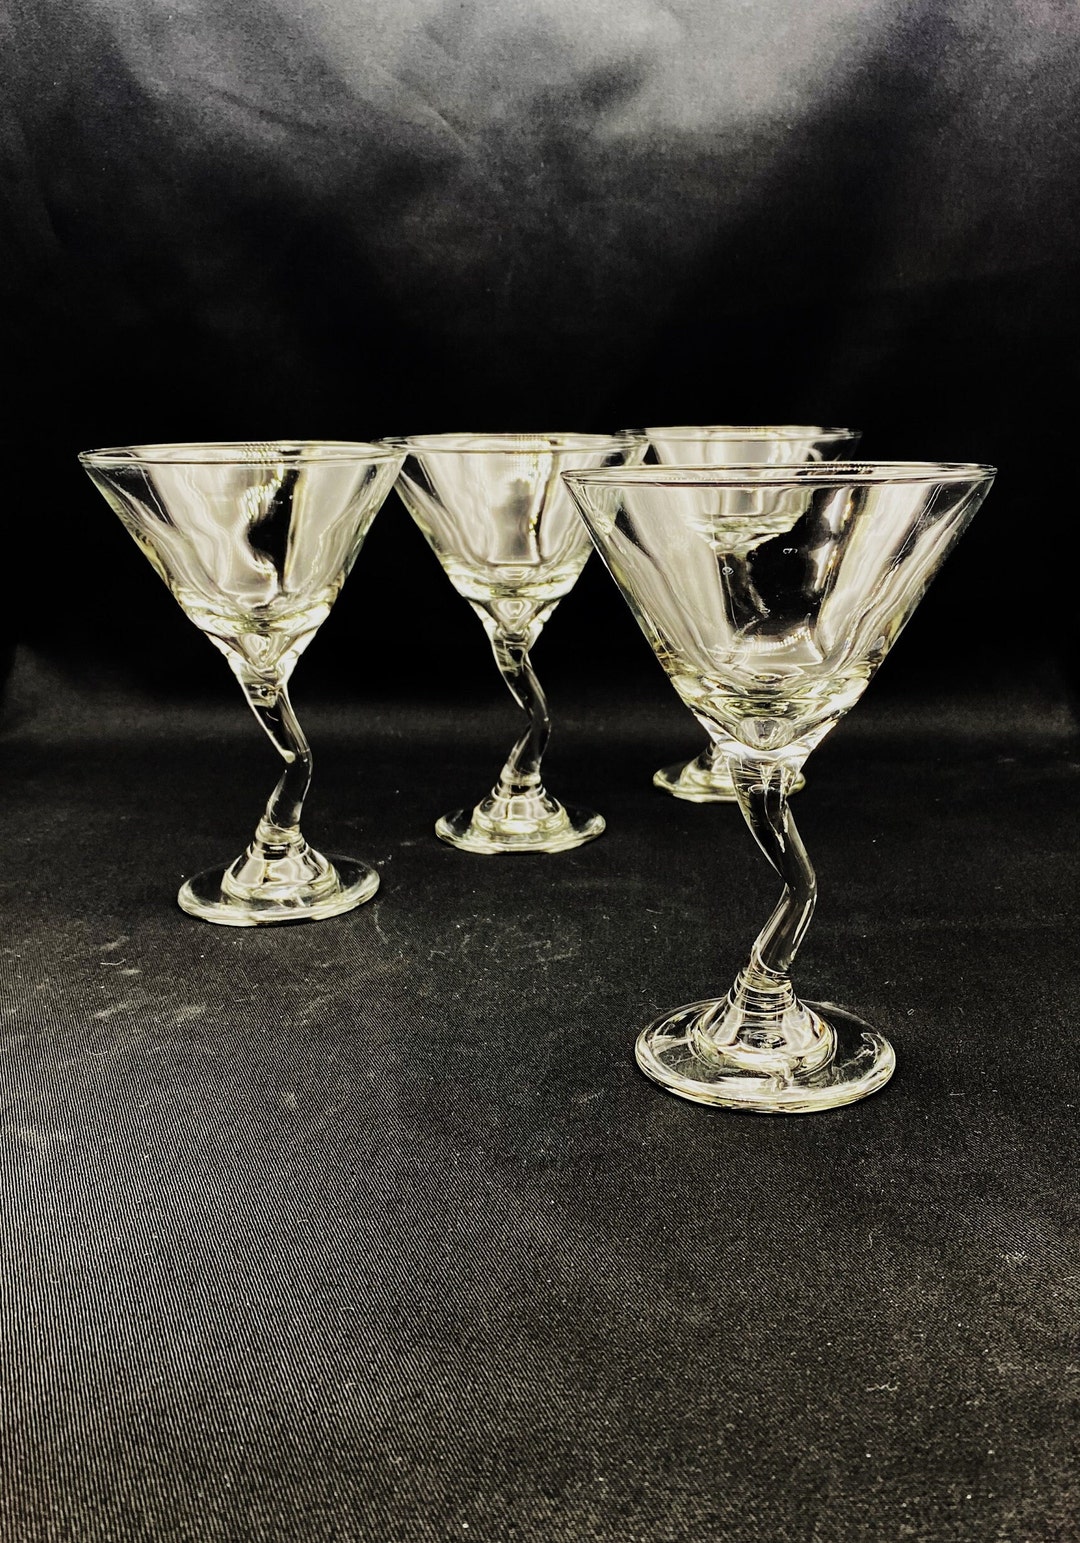 Vintage Starburst Martini Glasses – just dandies